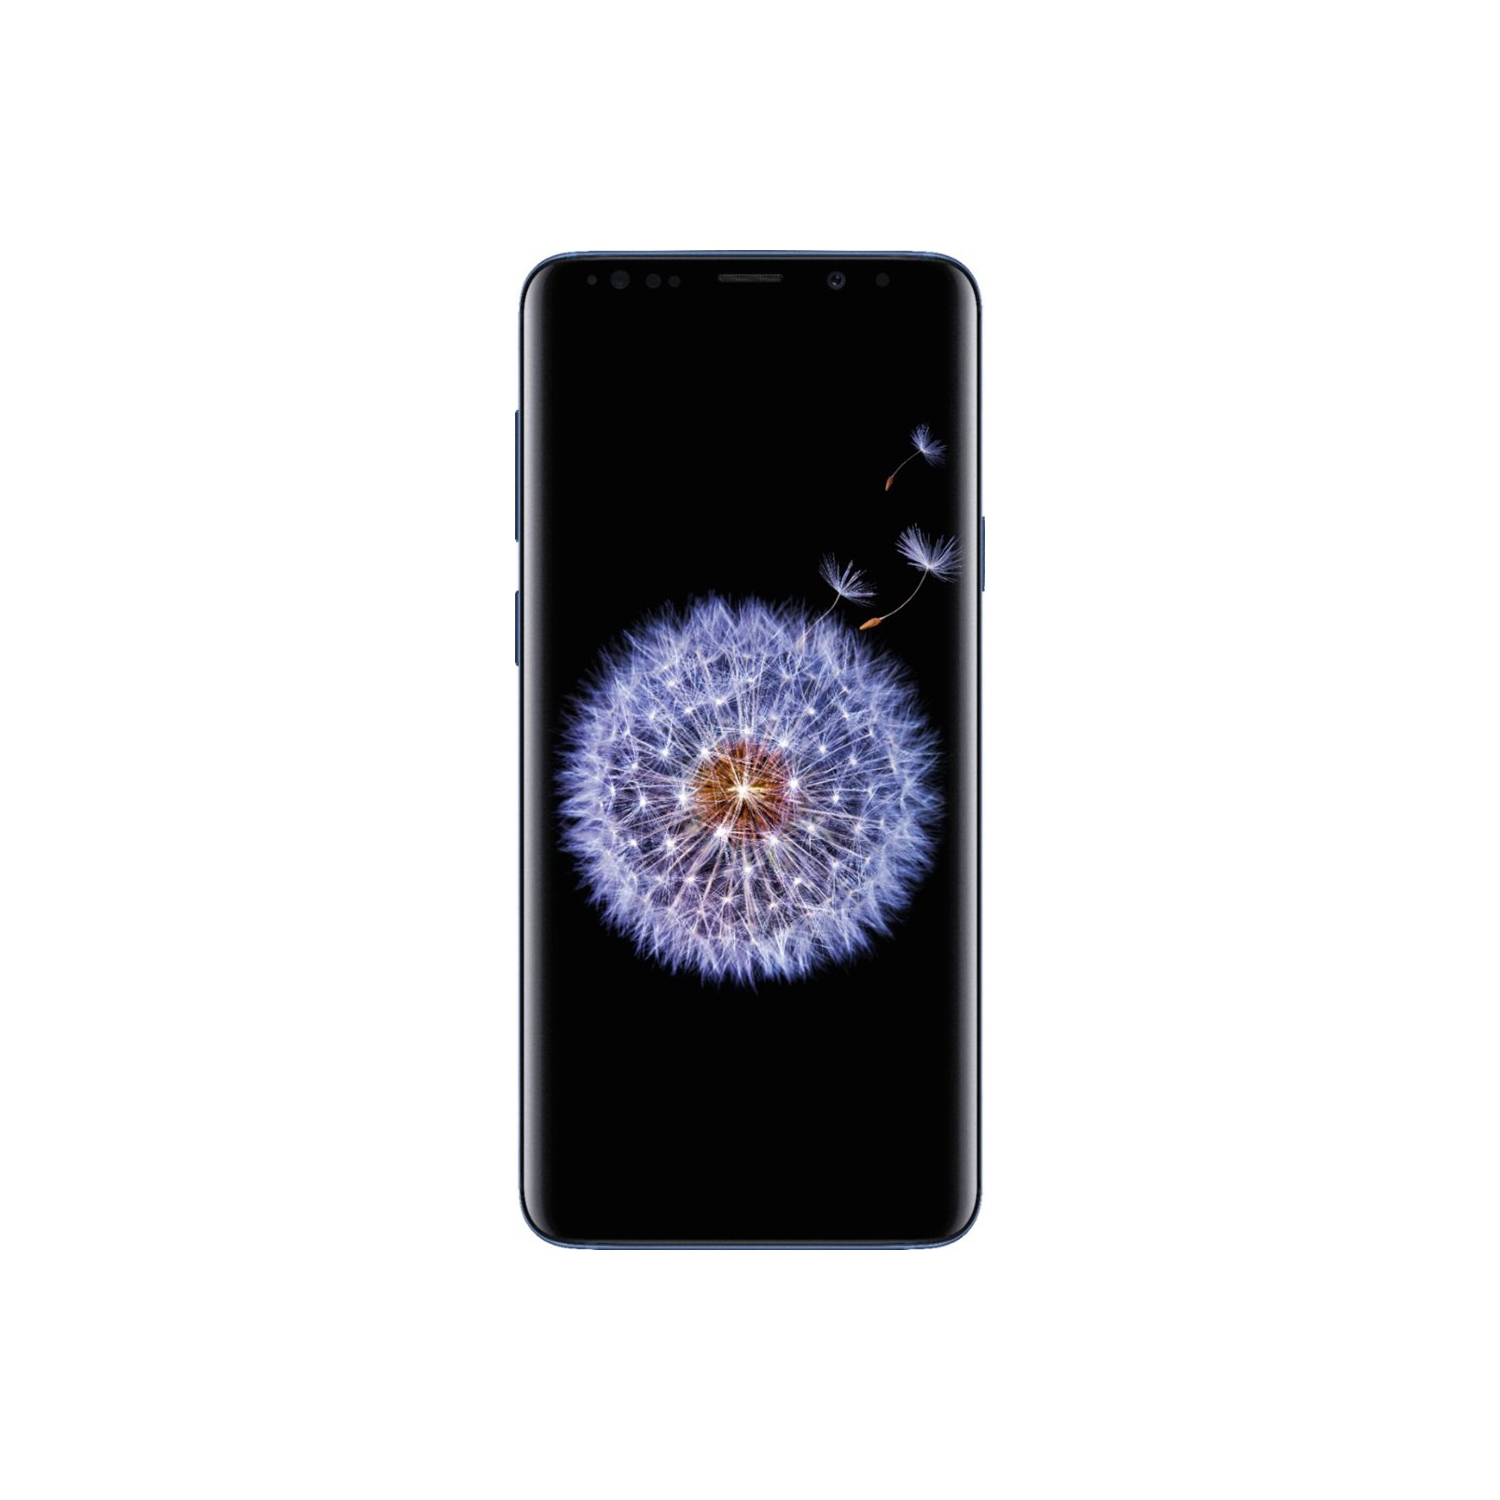 Refurbished (Good) - Samsung Galaxy S9+ 64GB Smartphone - Coral Blue - Unlocked